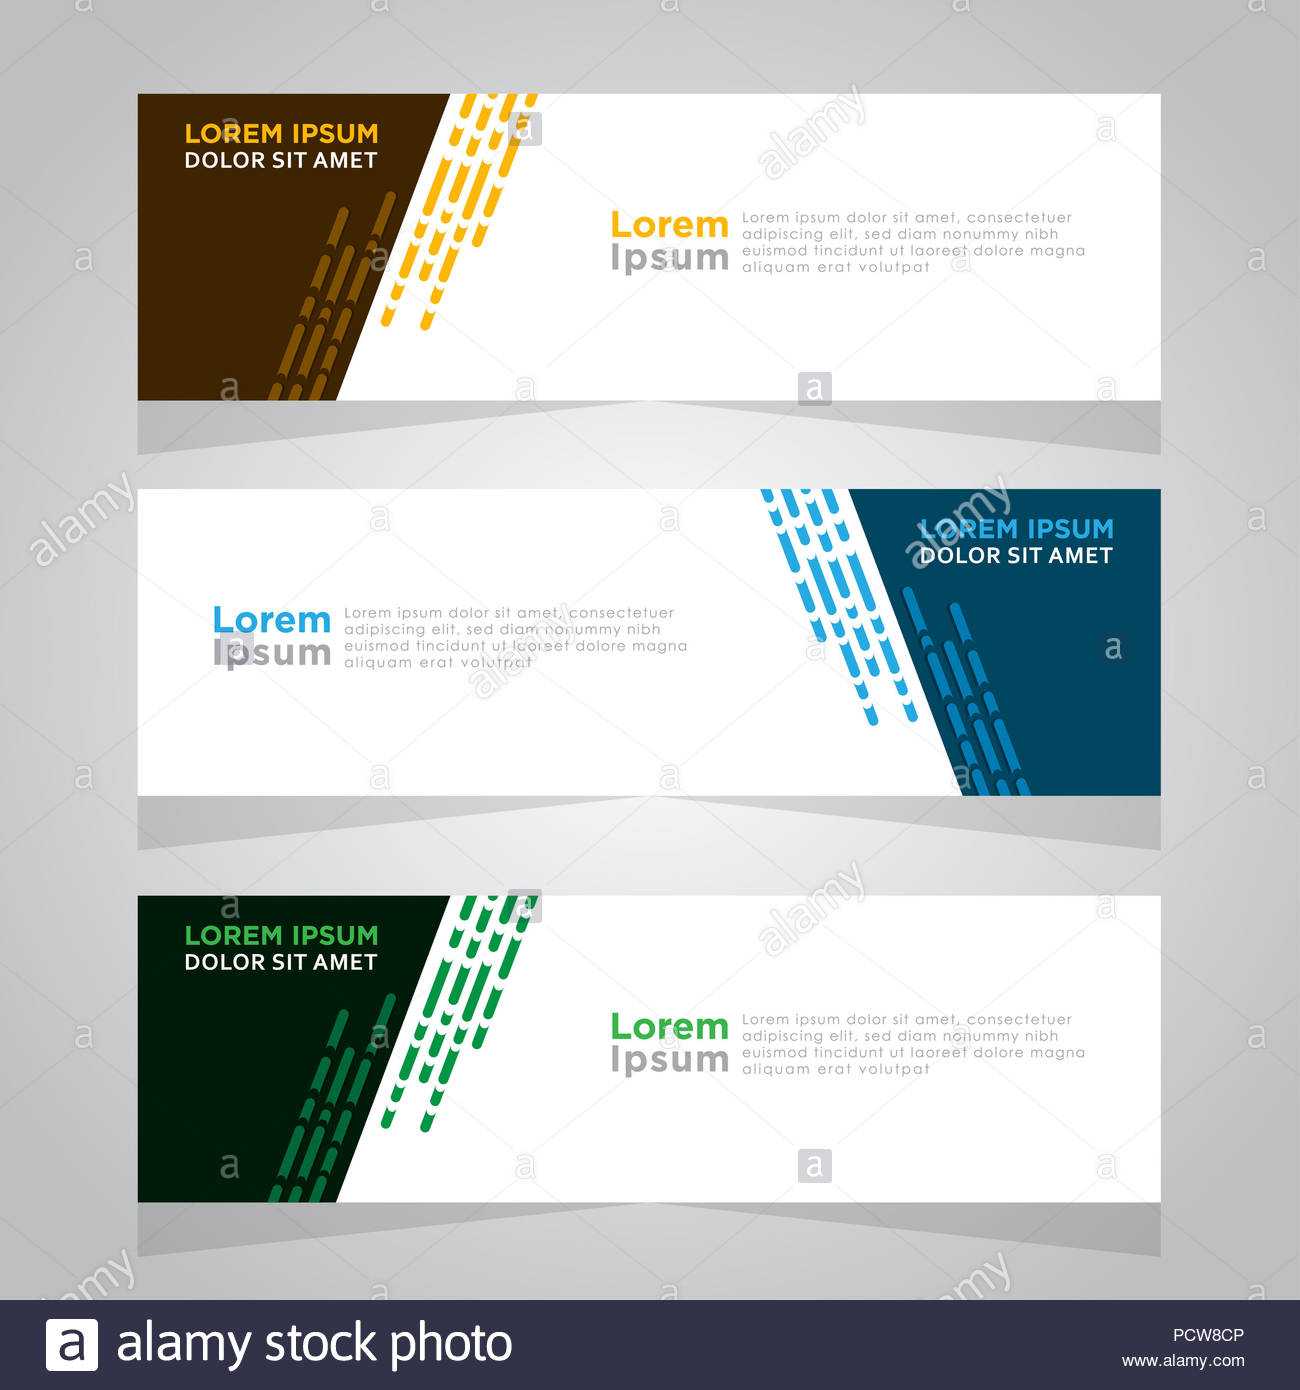 Vector Abstract Design Web Banner Template. Web Design With Regard To Website Banner Design Templates